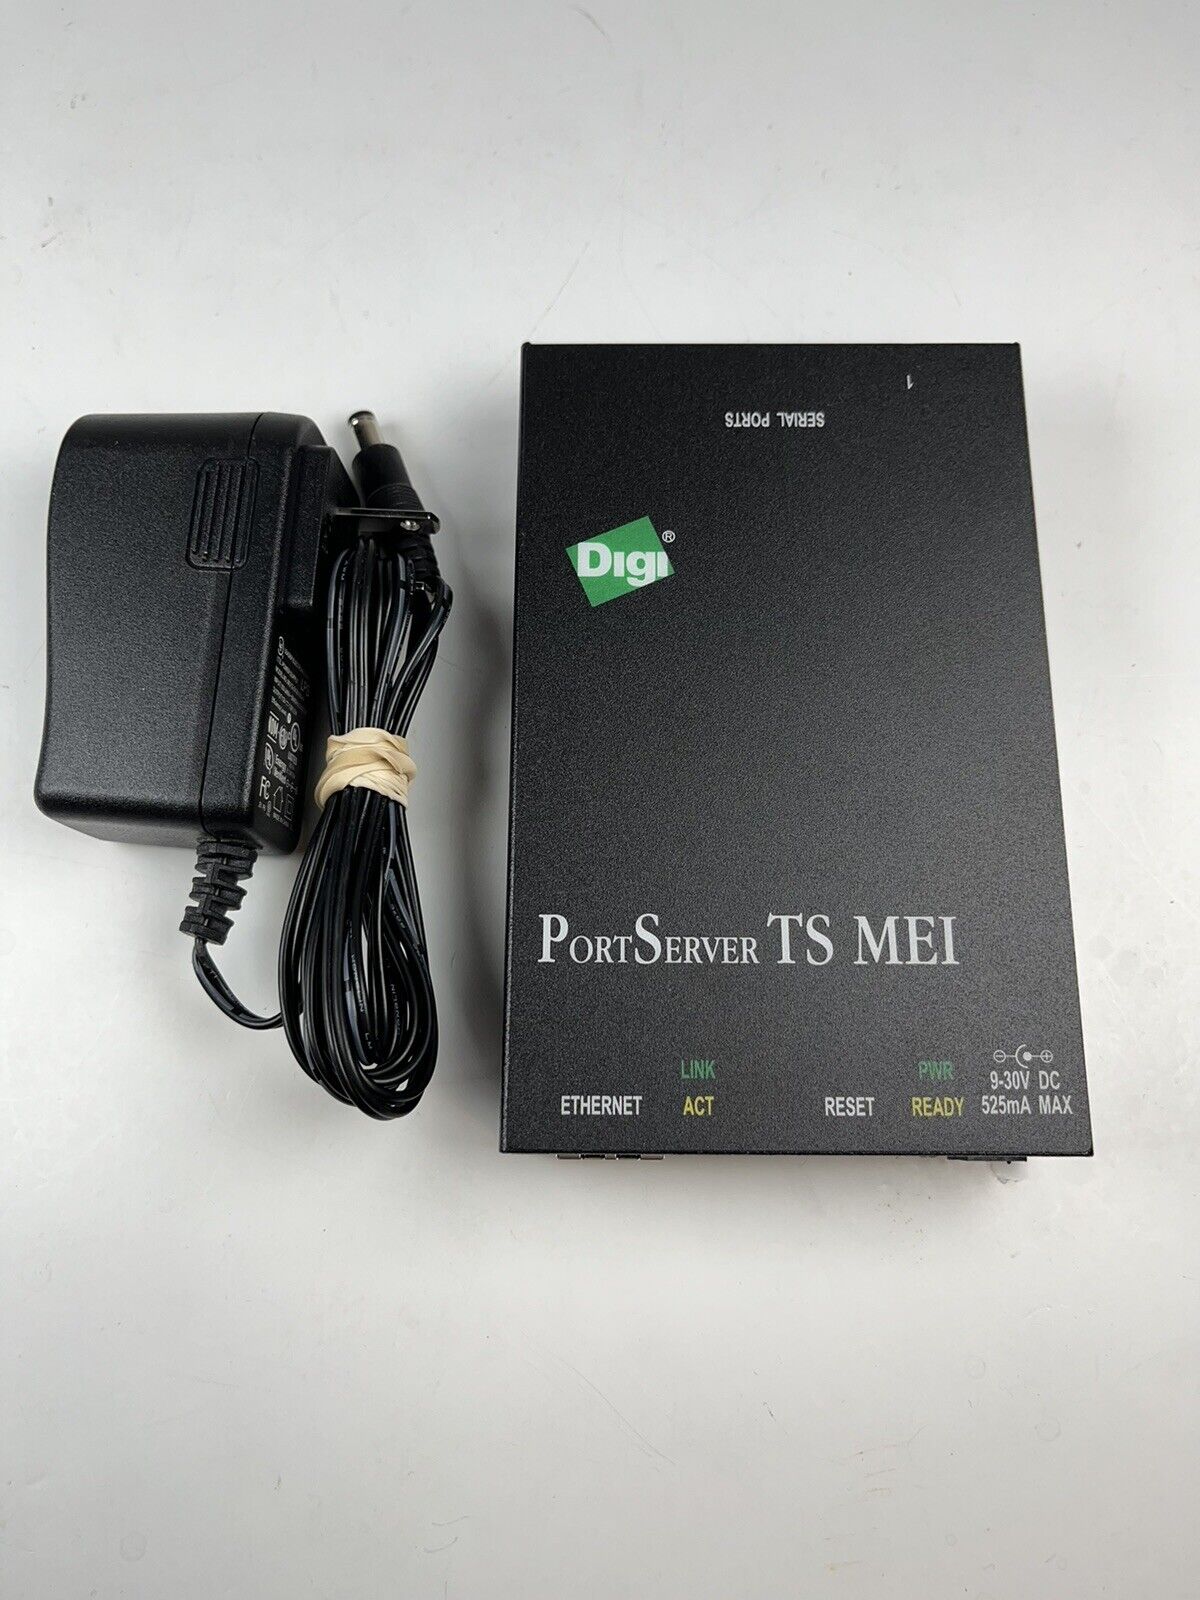 Digi PortServer TS 4 MEI Device Server 50000836-26 / RJ-45 Serial to Ethernet